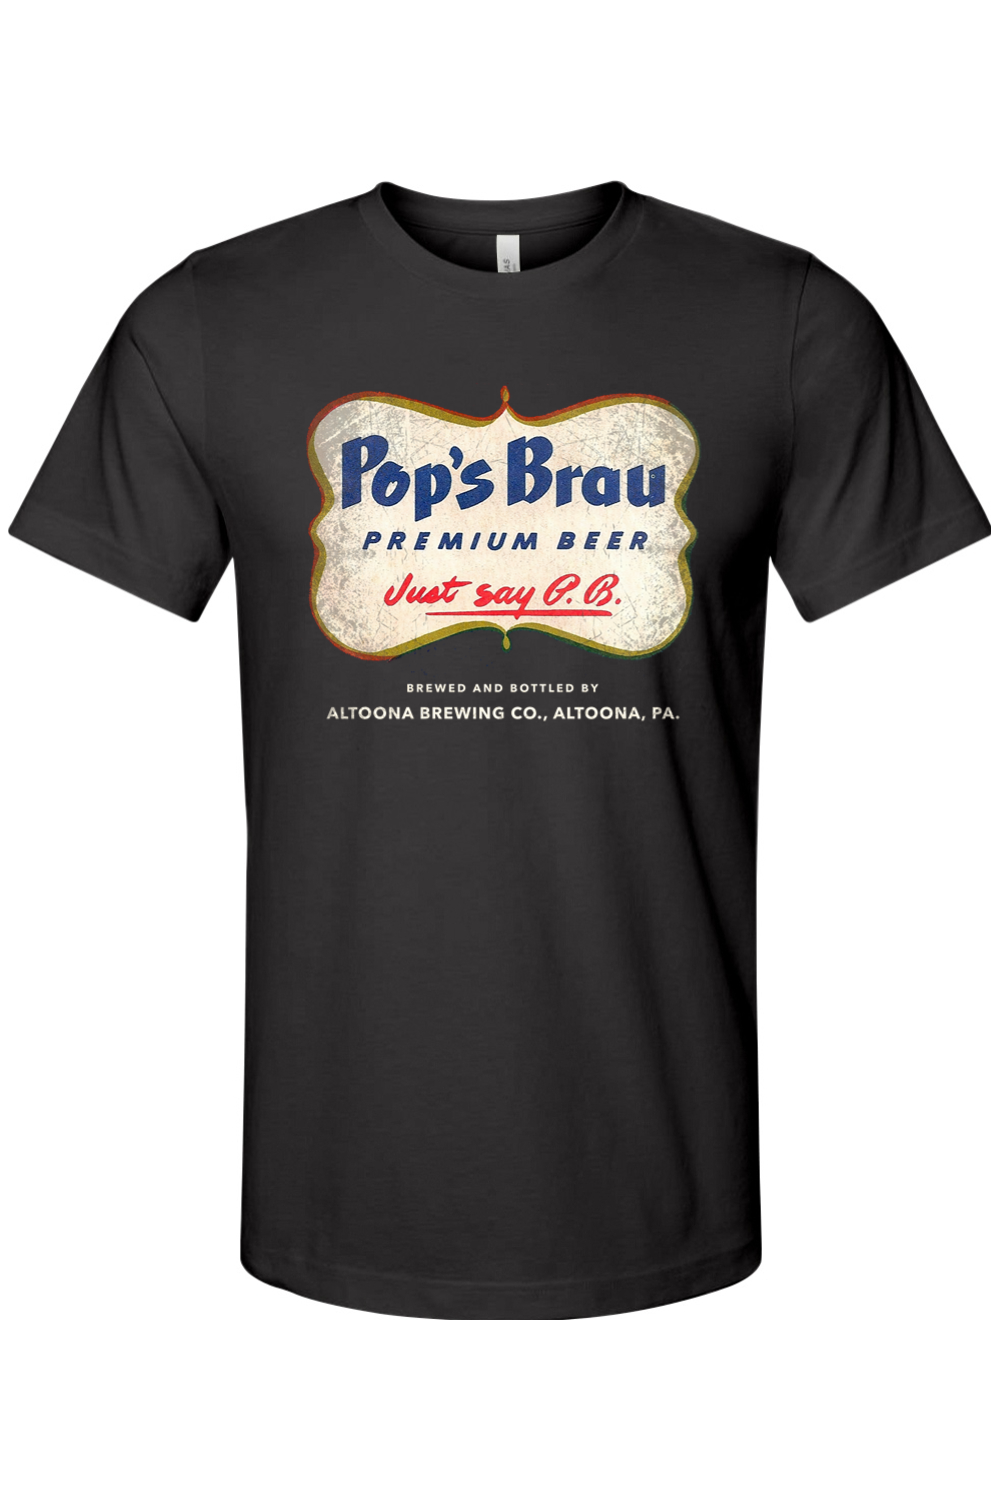 Pop's Brau Beer - Altoona, PA - Yinzylvania